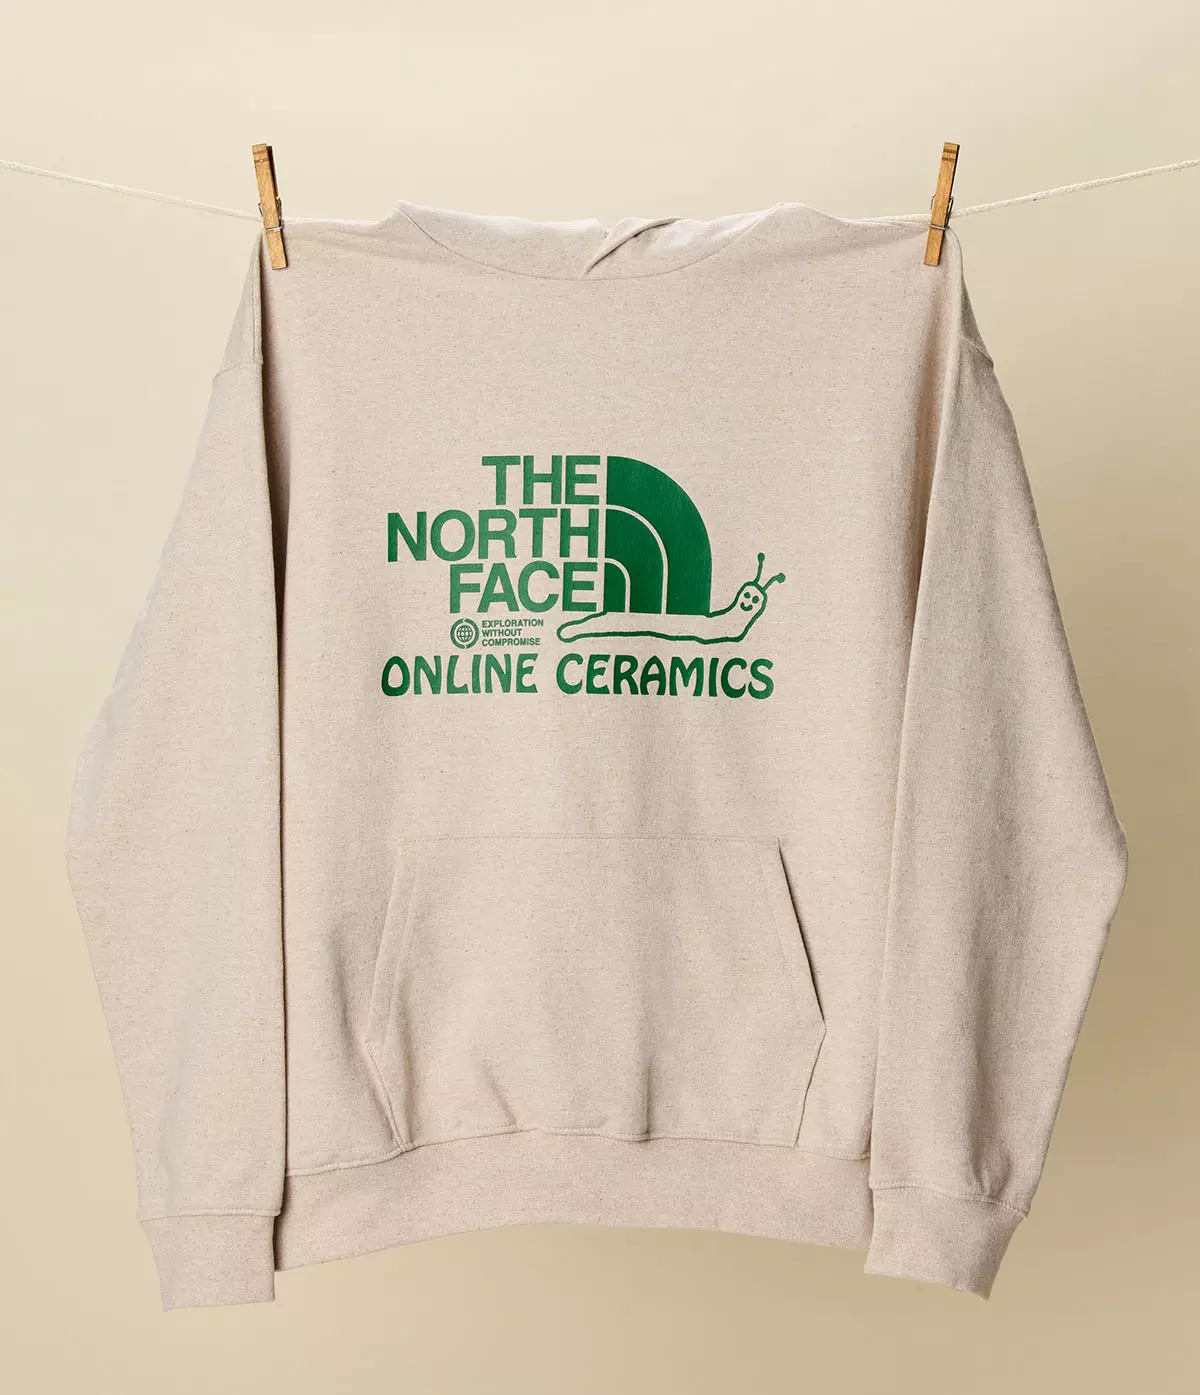 The North Face x Online Ceramics - Jour de la Terre 2022